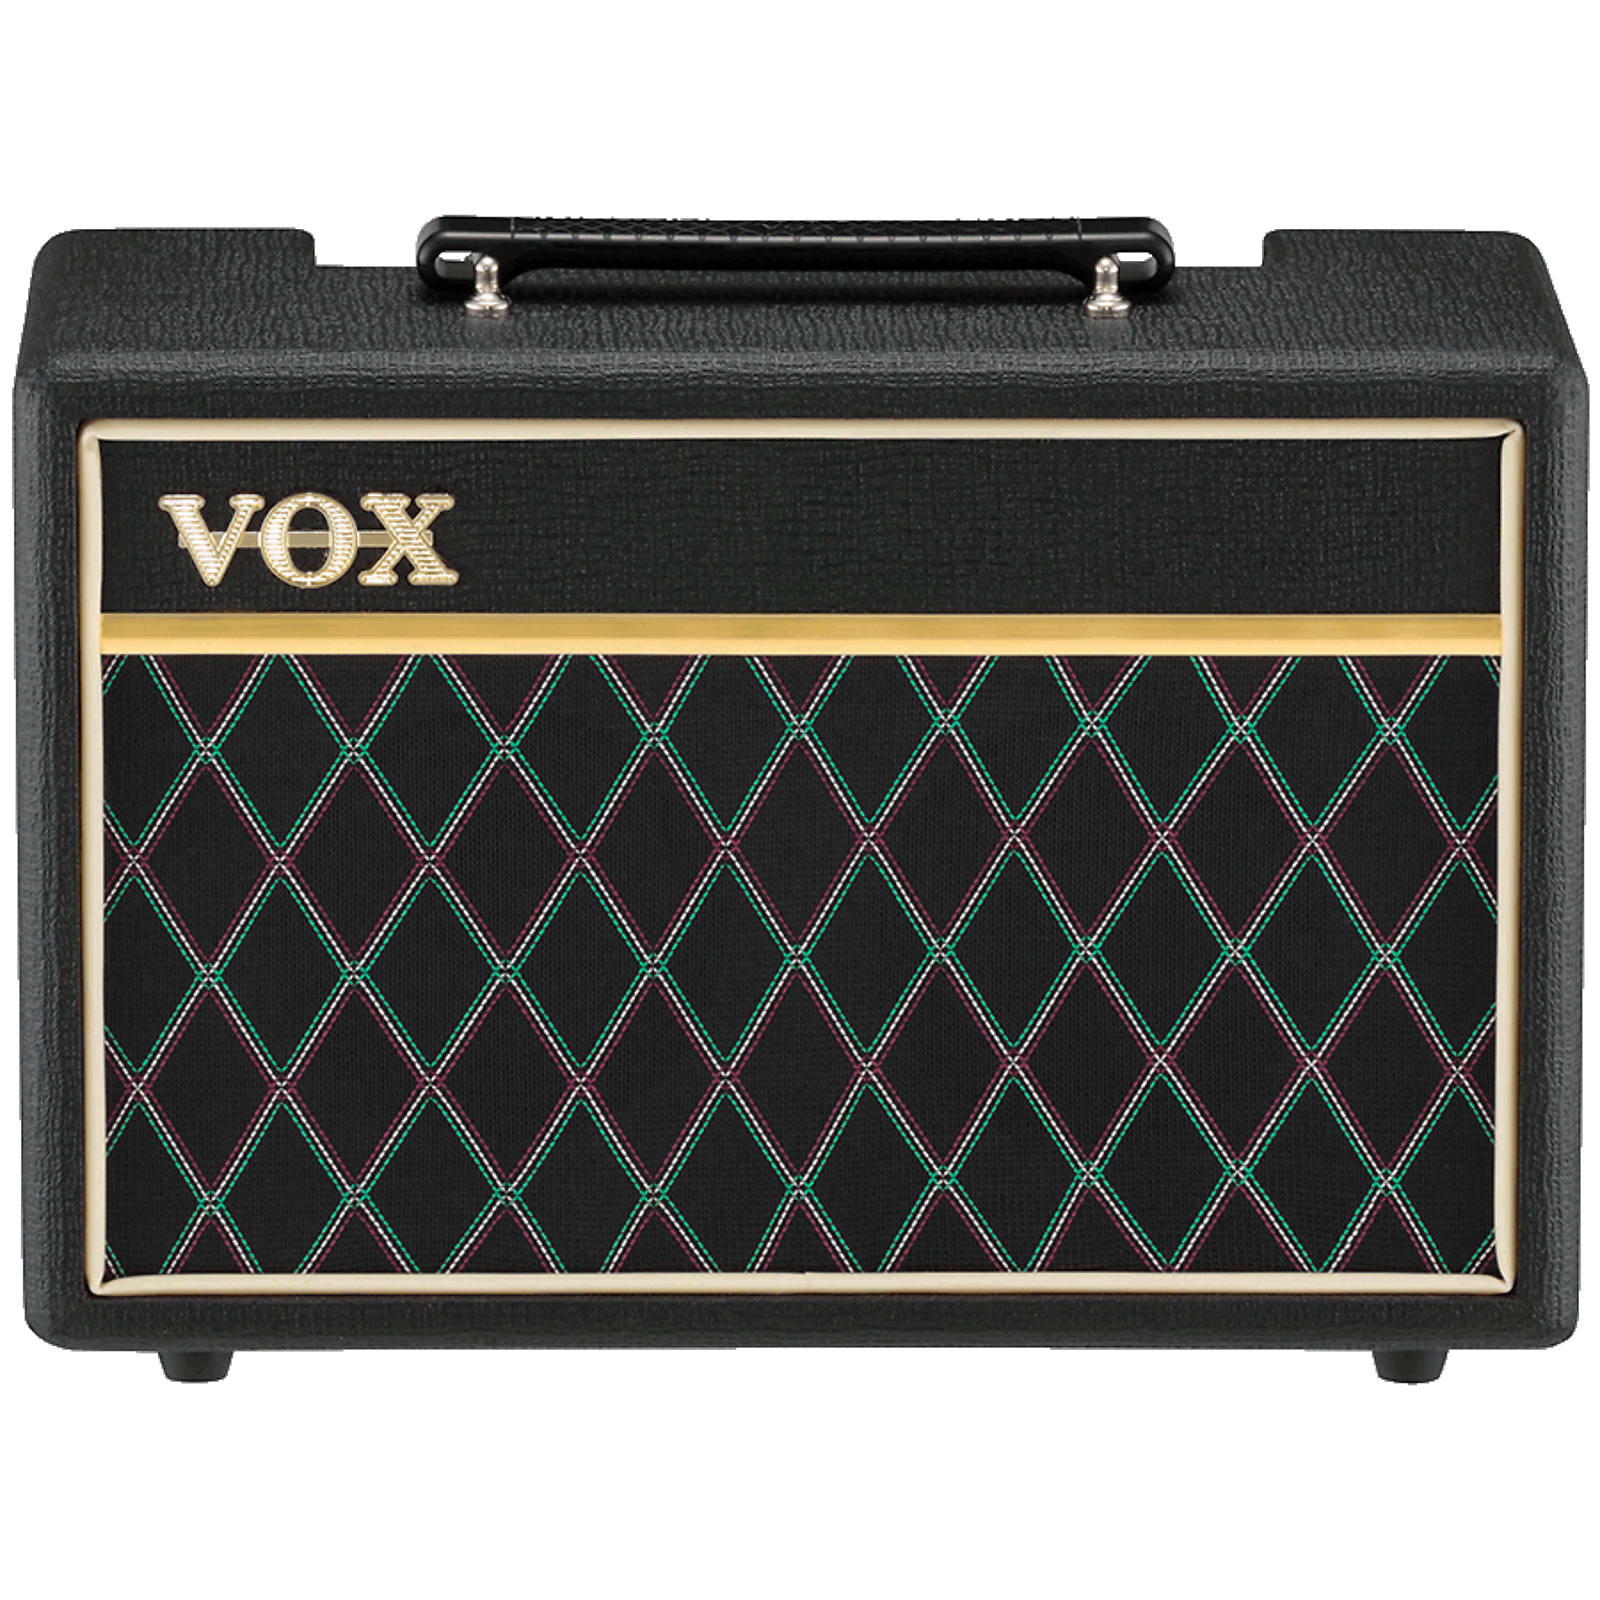 Vox Pathfinder Bass 10 10-Watt 2x5